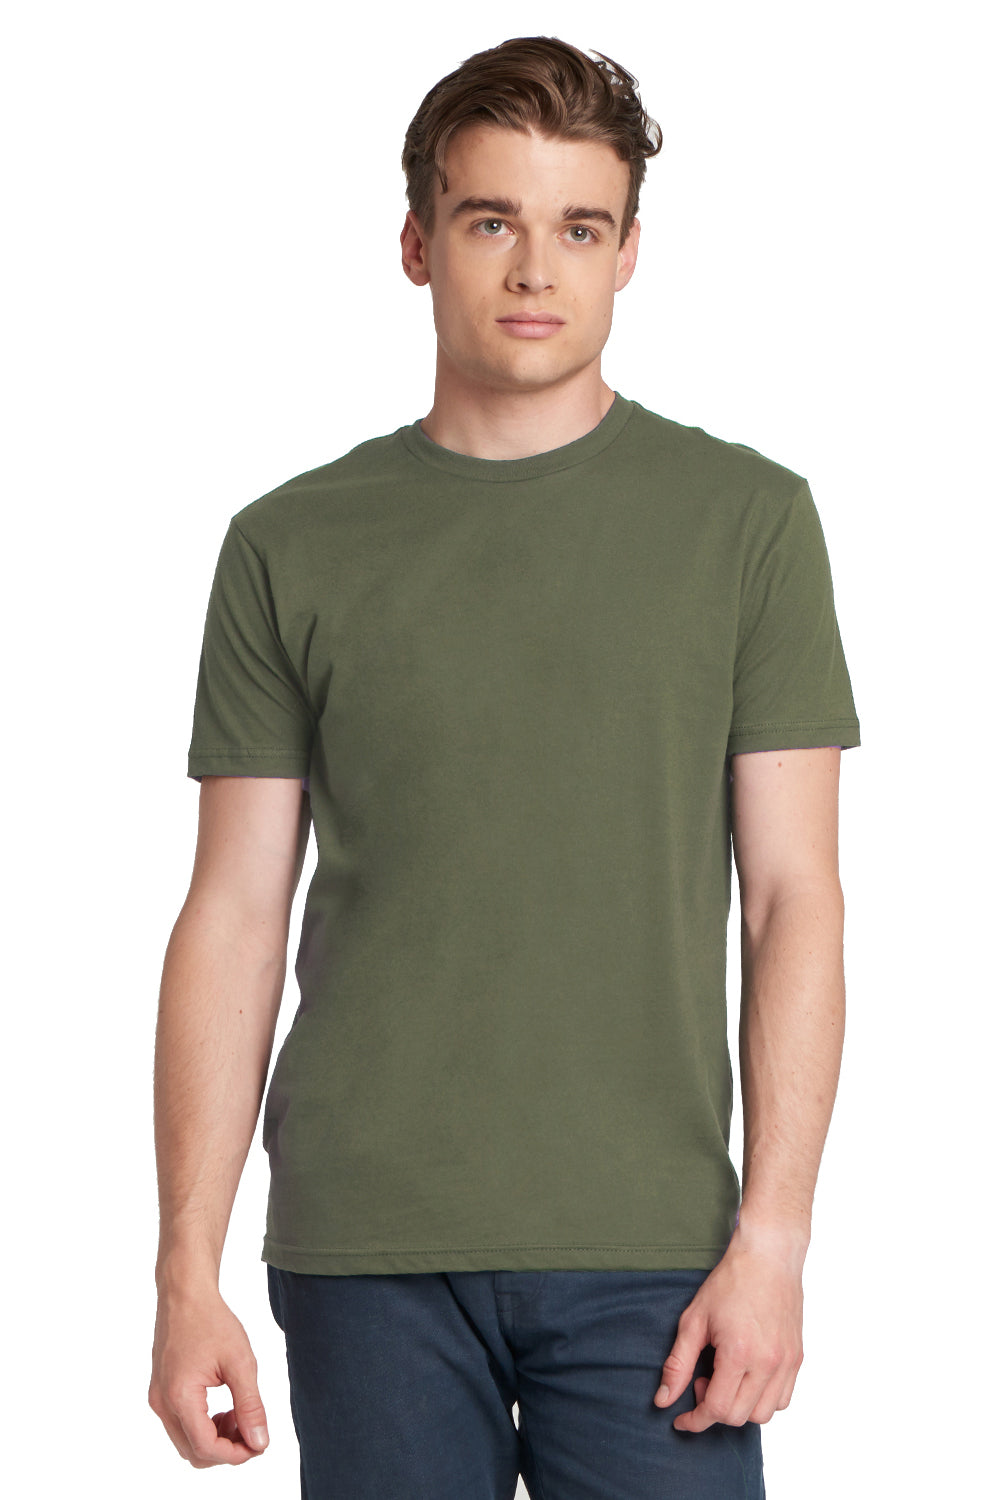 Next Level 3600 Mens Fine Jersey Short Sleeve Crewneck T-Shirt Military Green Front